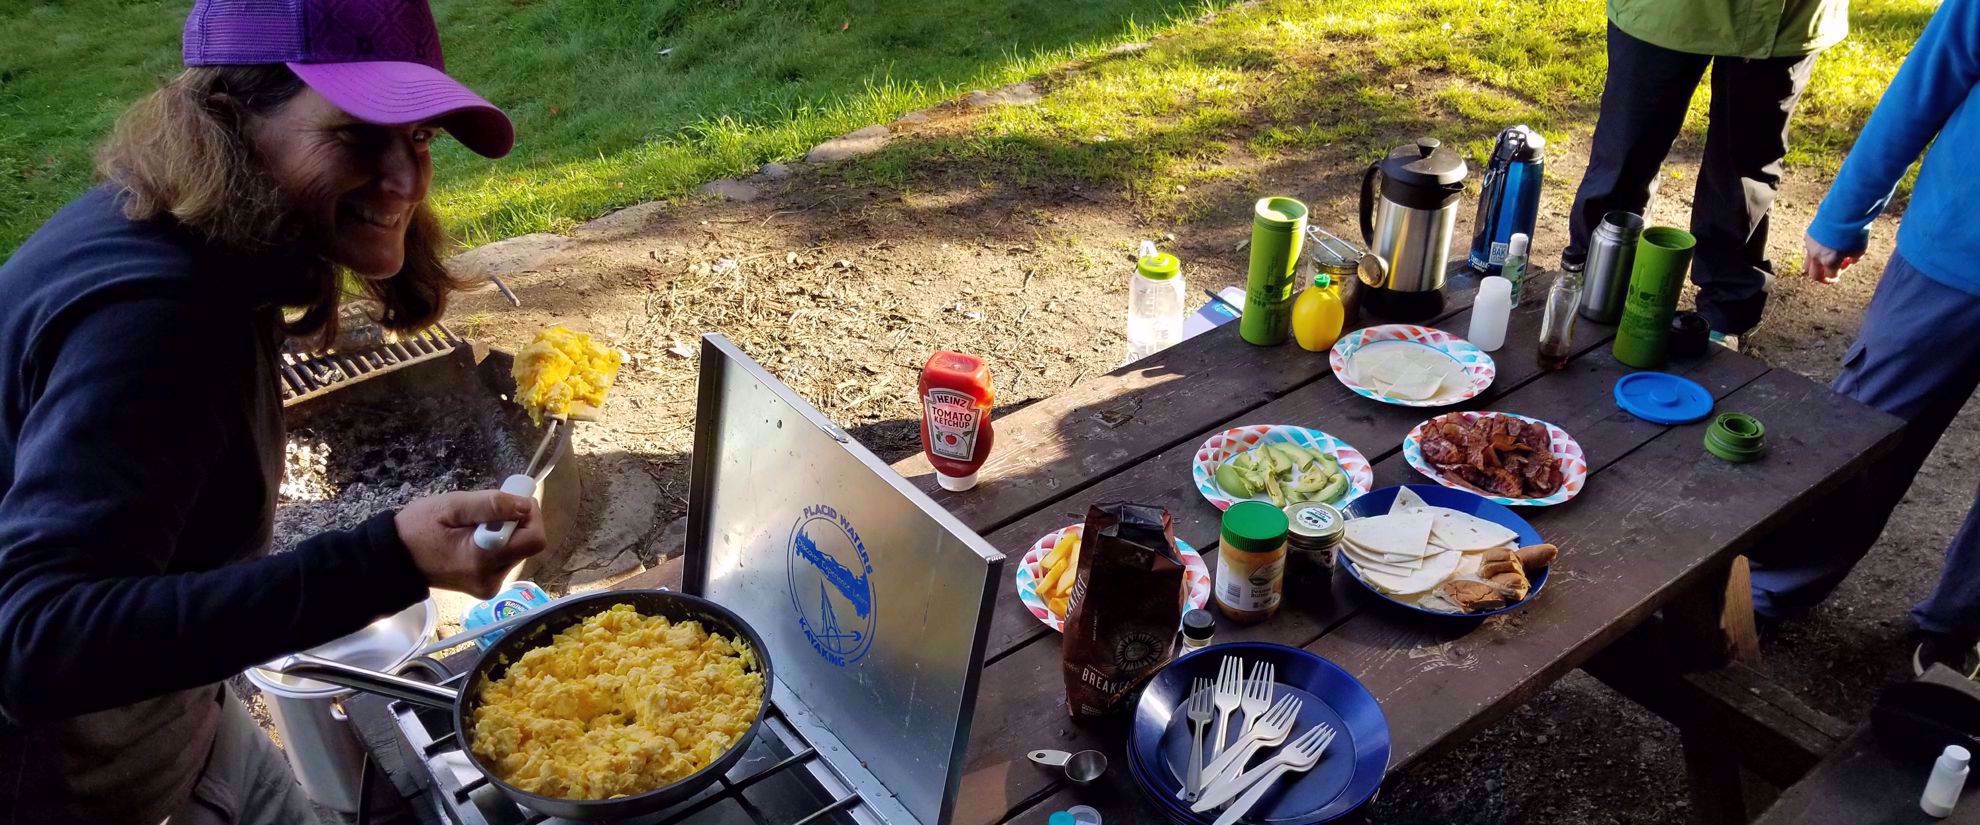 making breakfast at campsite adirondacks